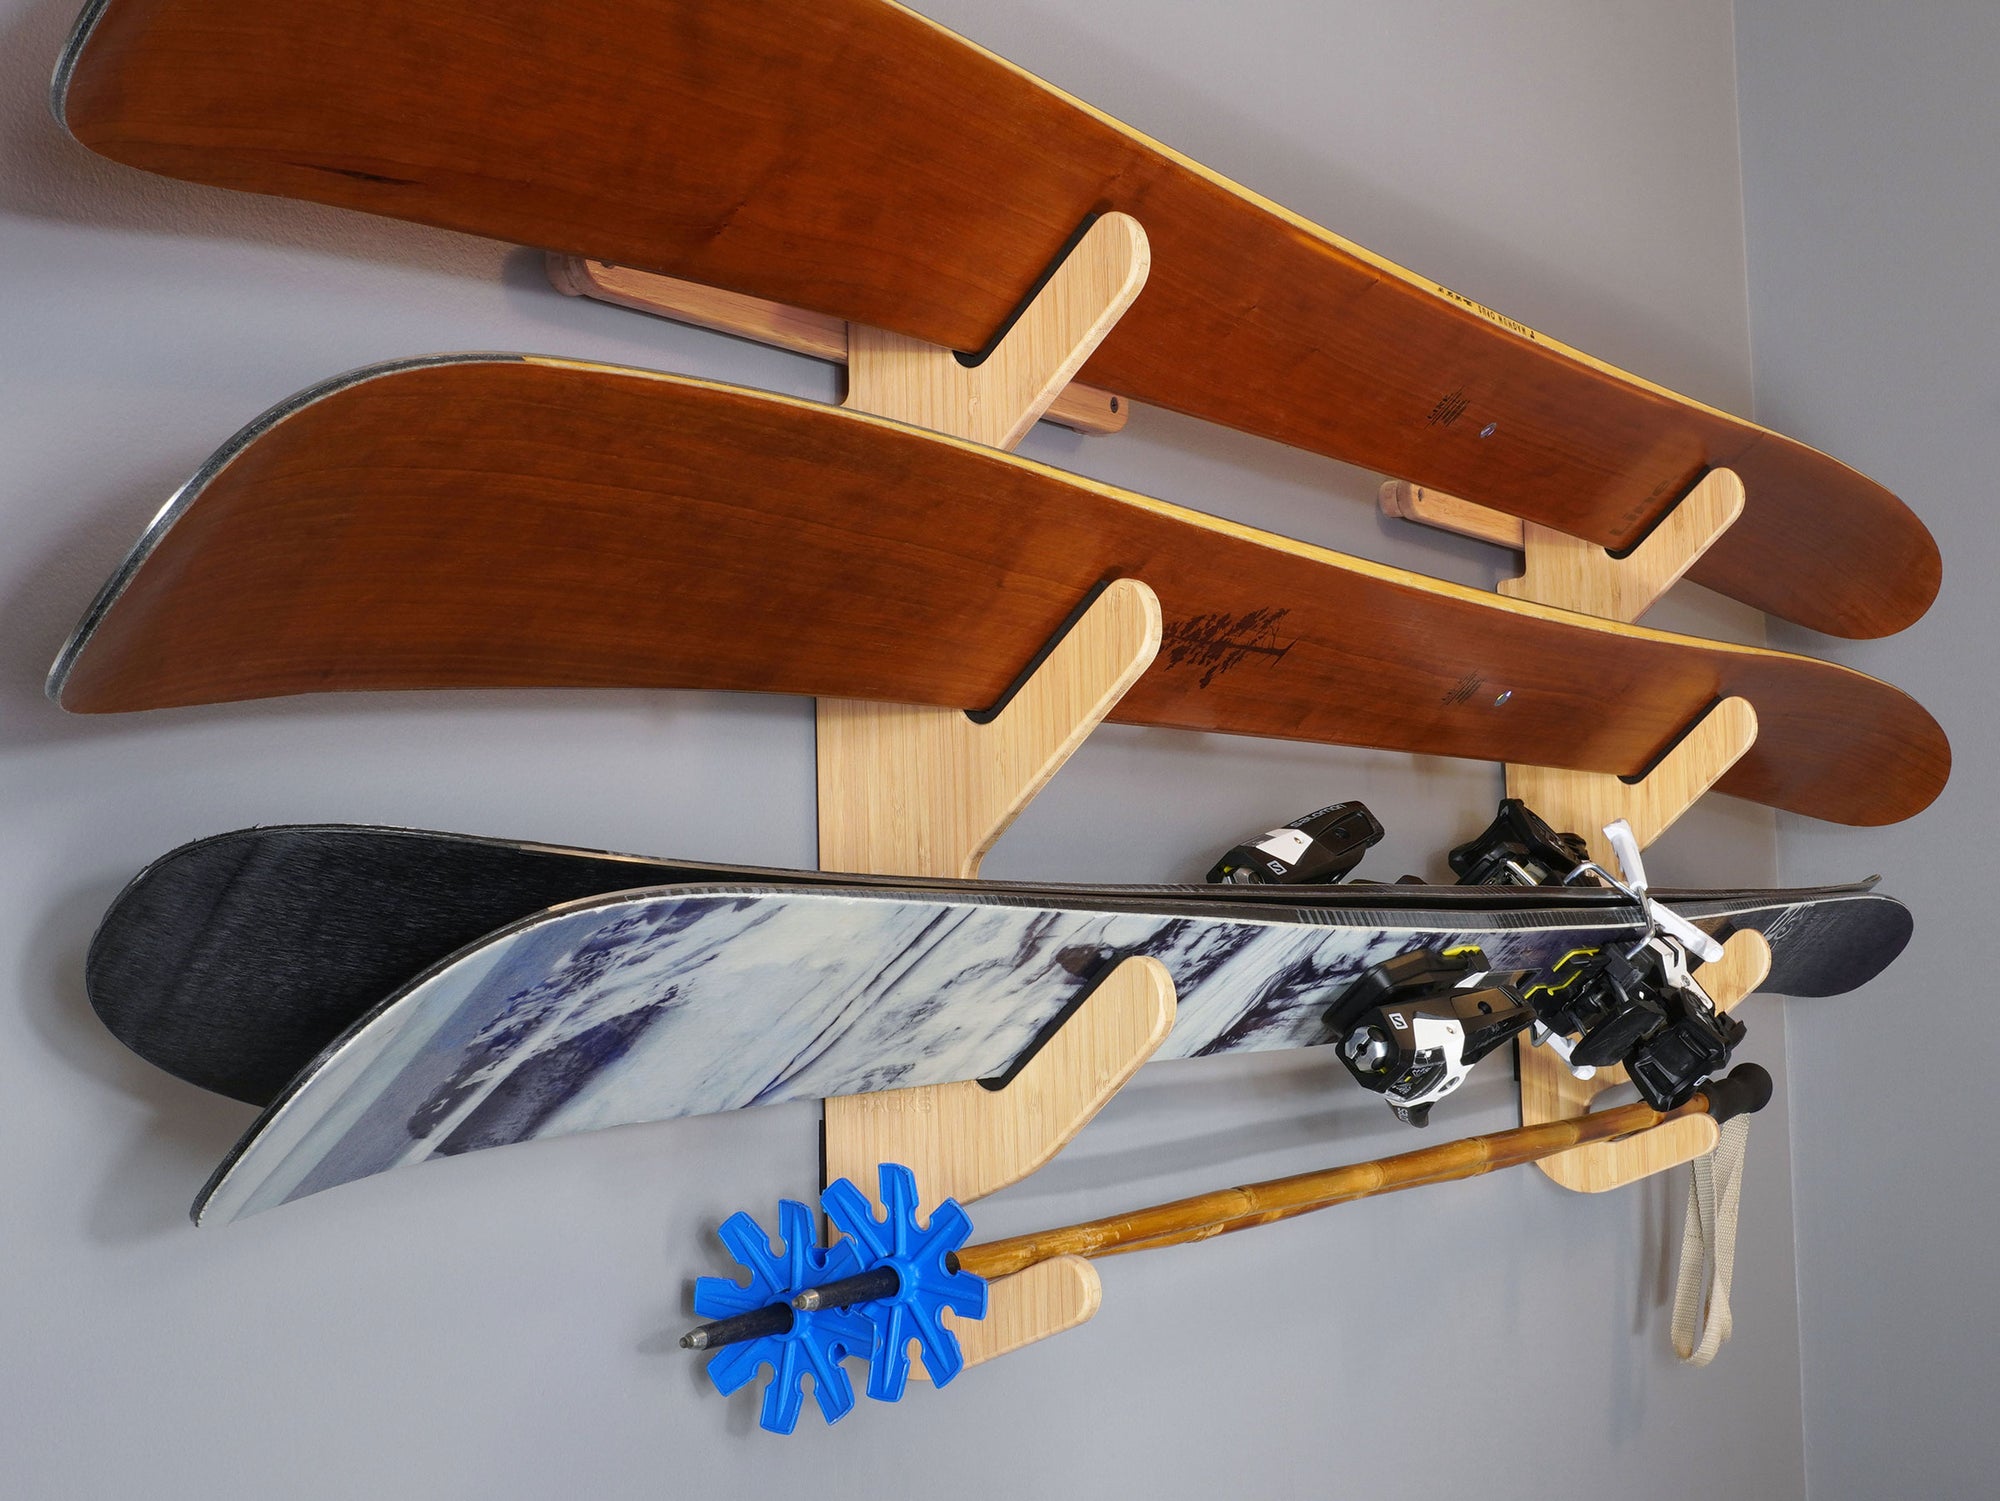 Bamboo Wood Ski Rack with Poles - Grassracks Hallsteiner Trip